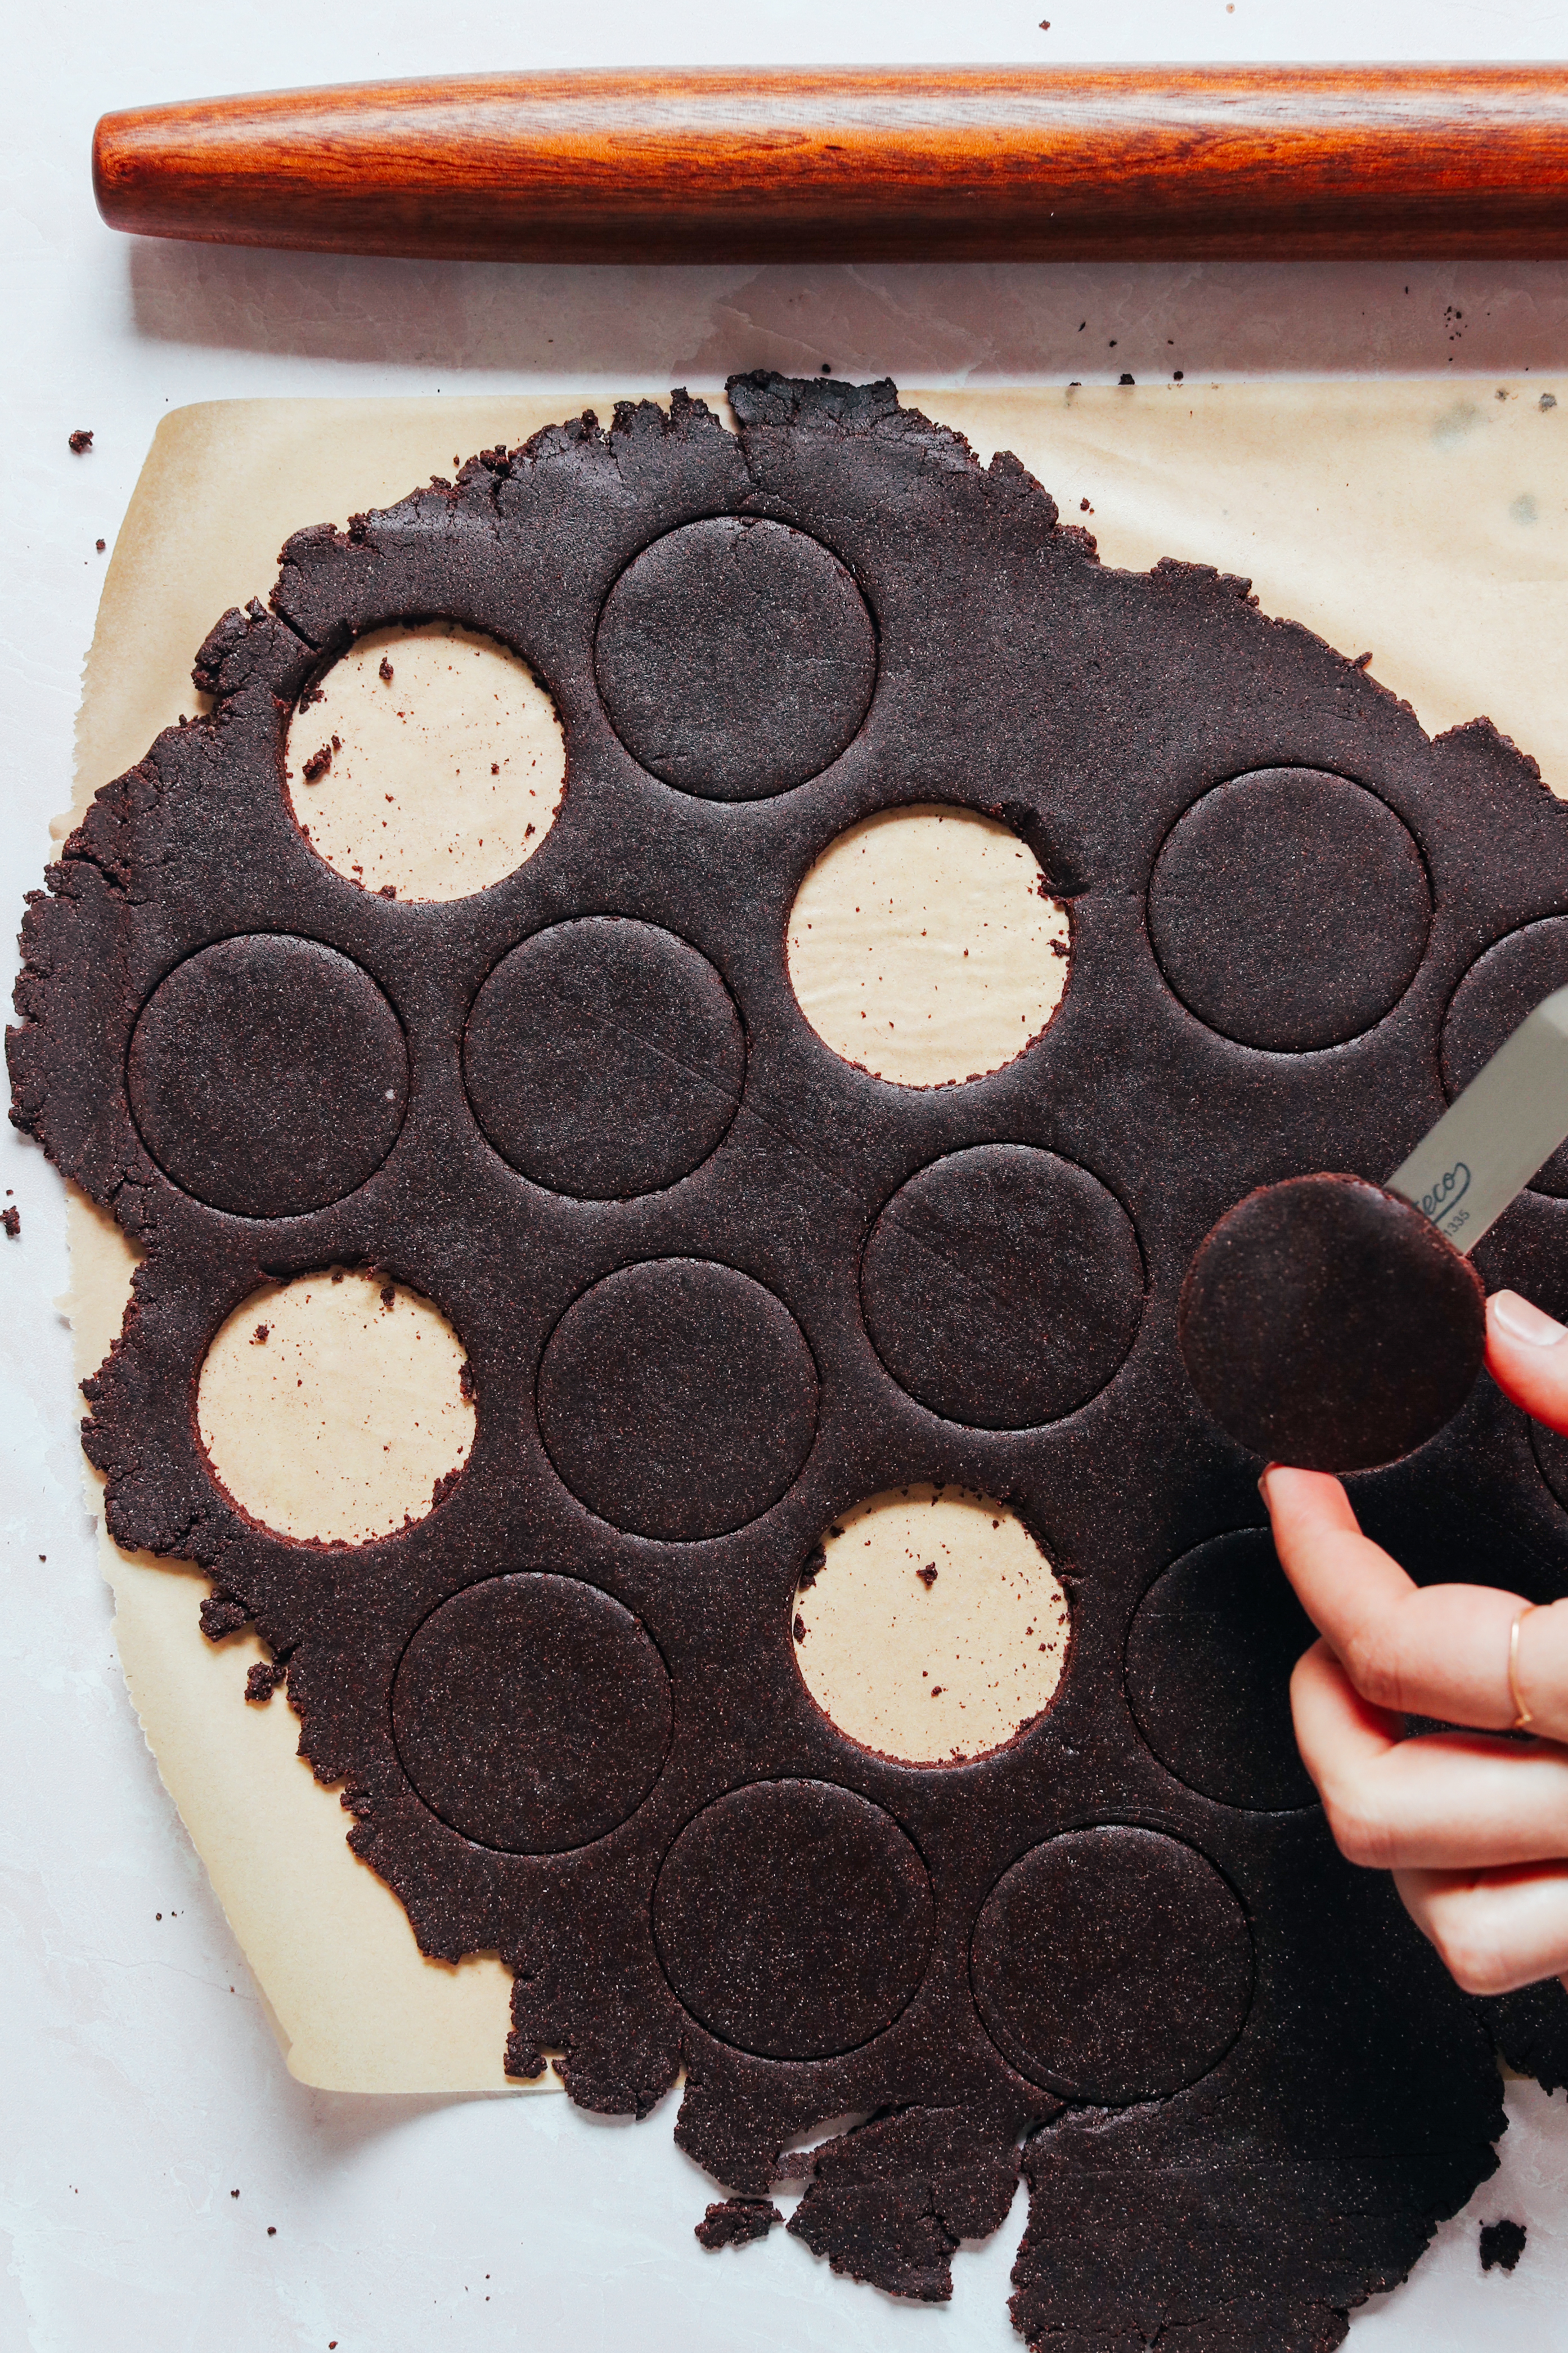 Masa de galleta de chocolate enrollada cortada con un cortador de galletas circular